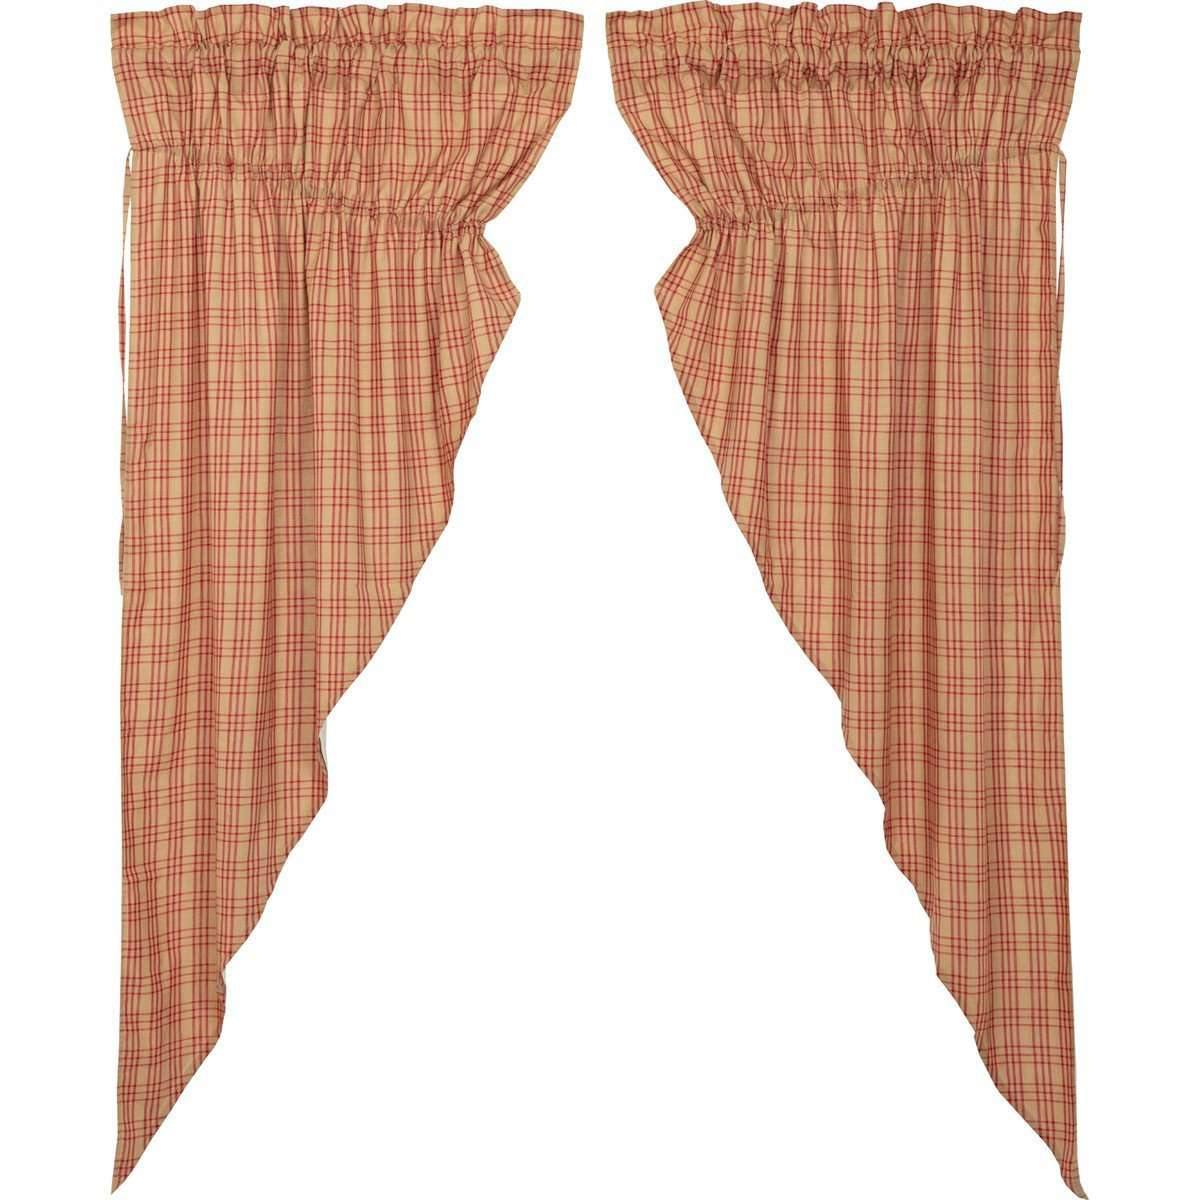 Sawyer Mill Red Plaid Prairie Short Panel Curtain Set of 2 63x36x18 VHC Brands - The Fox Decor